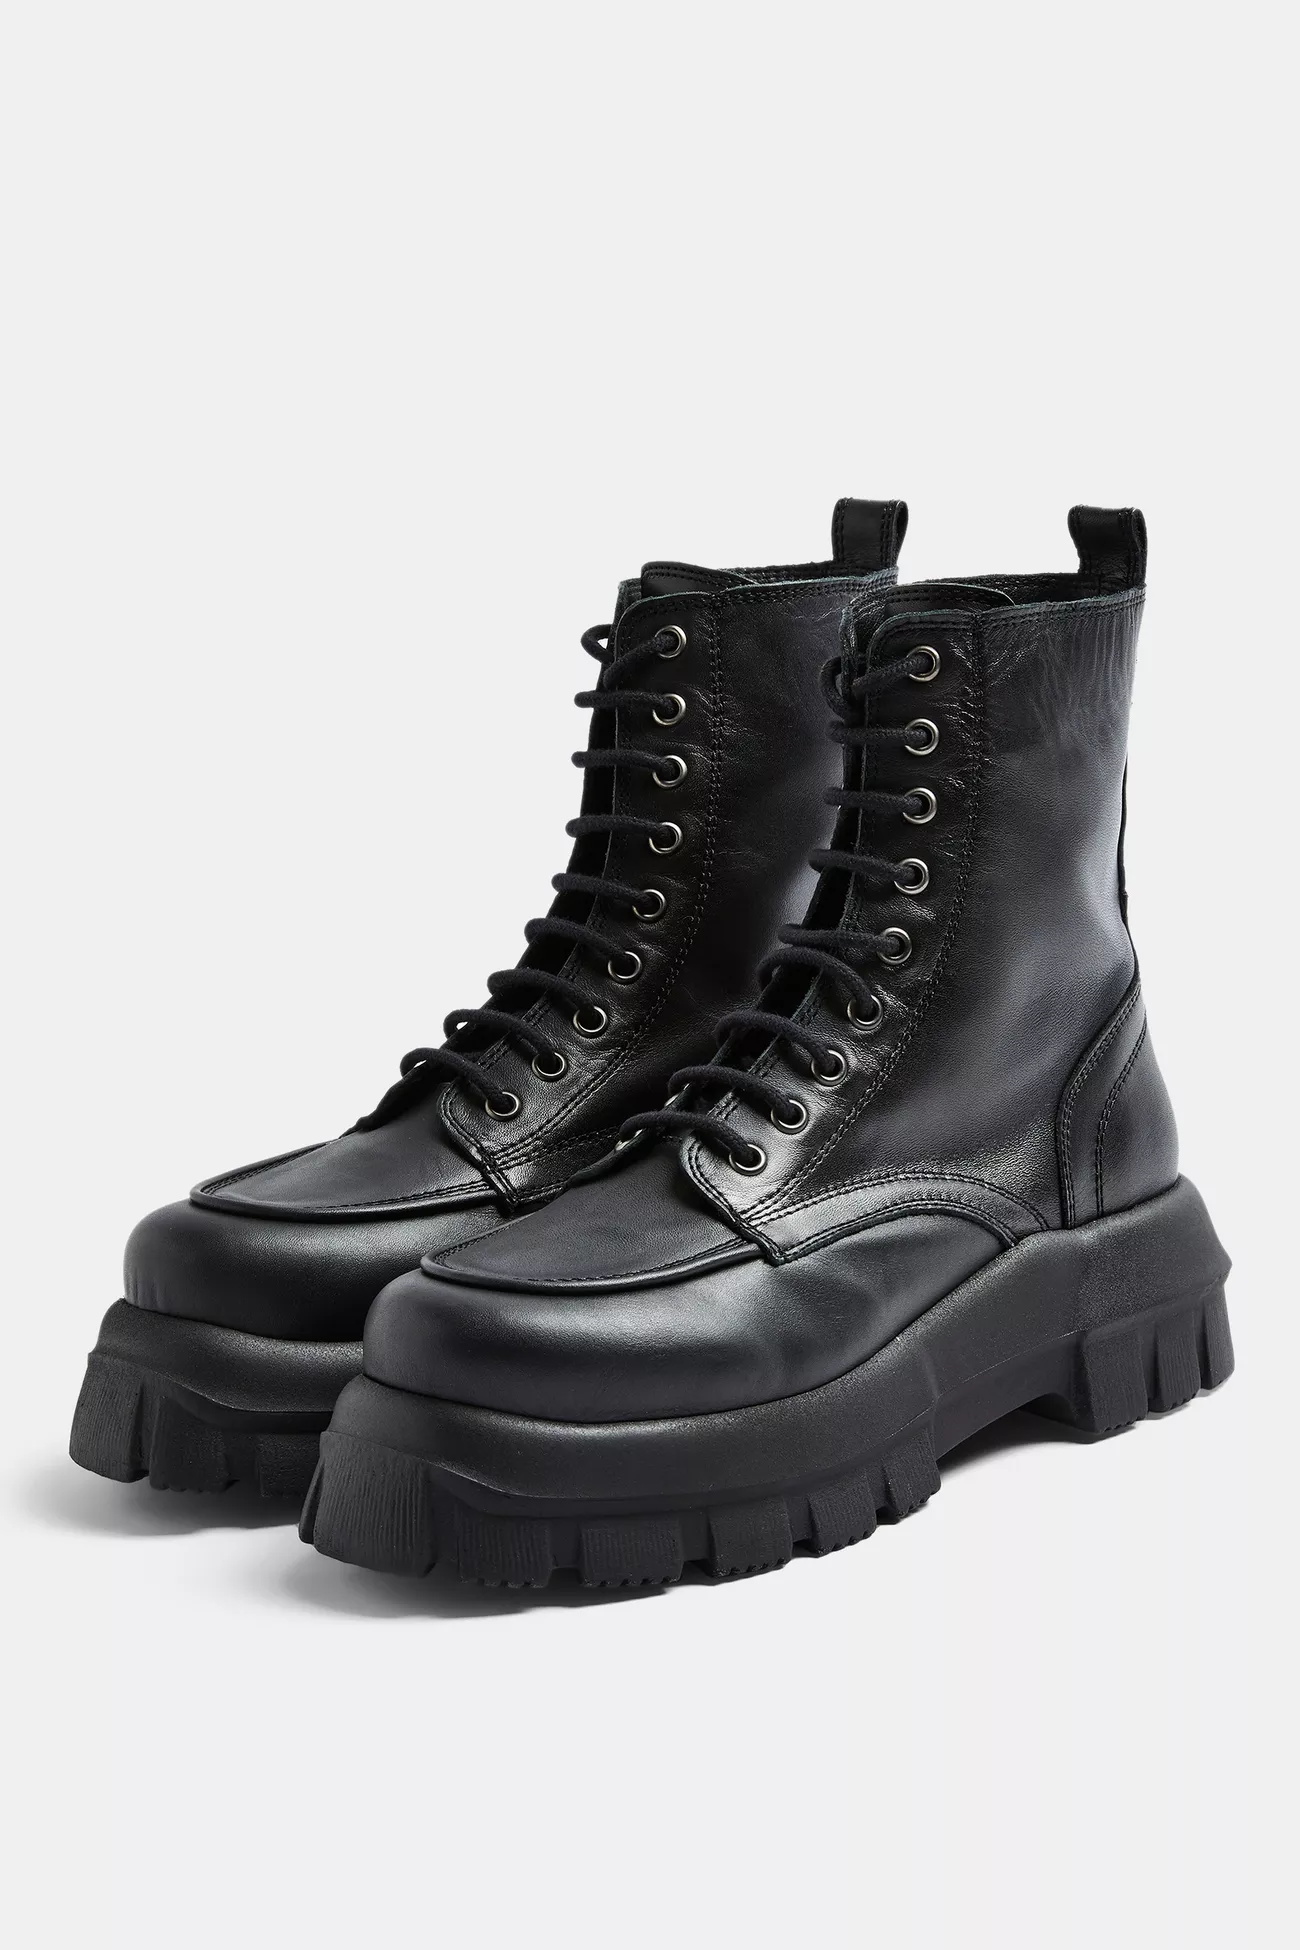 trendy combat boots